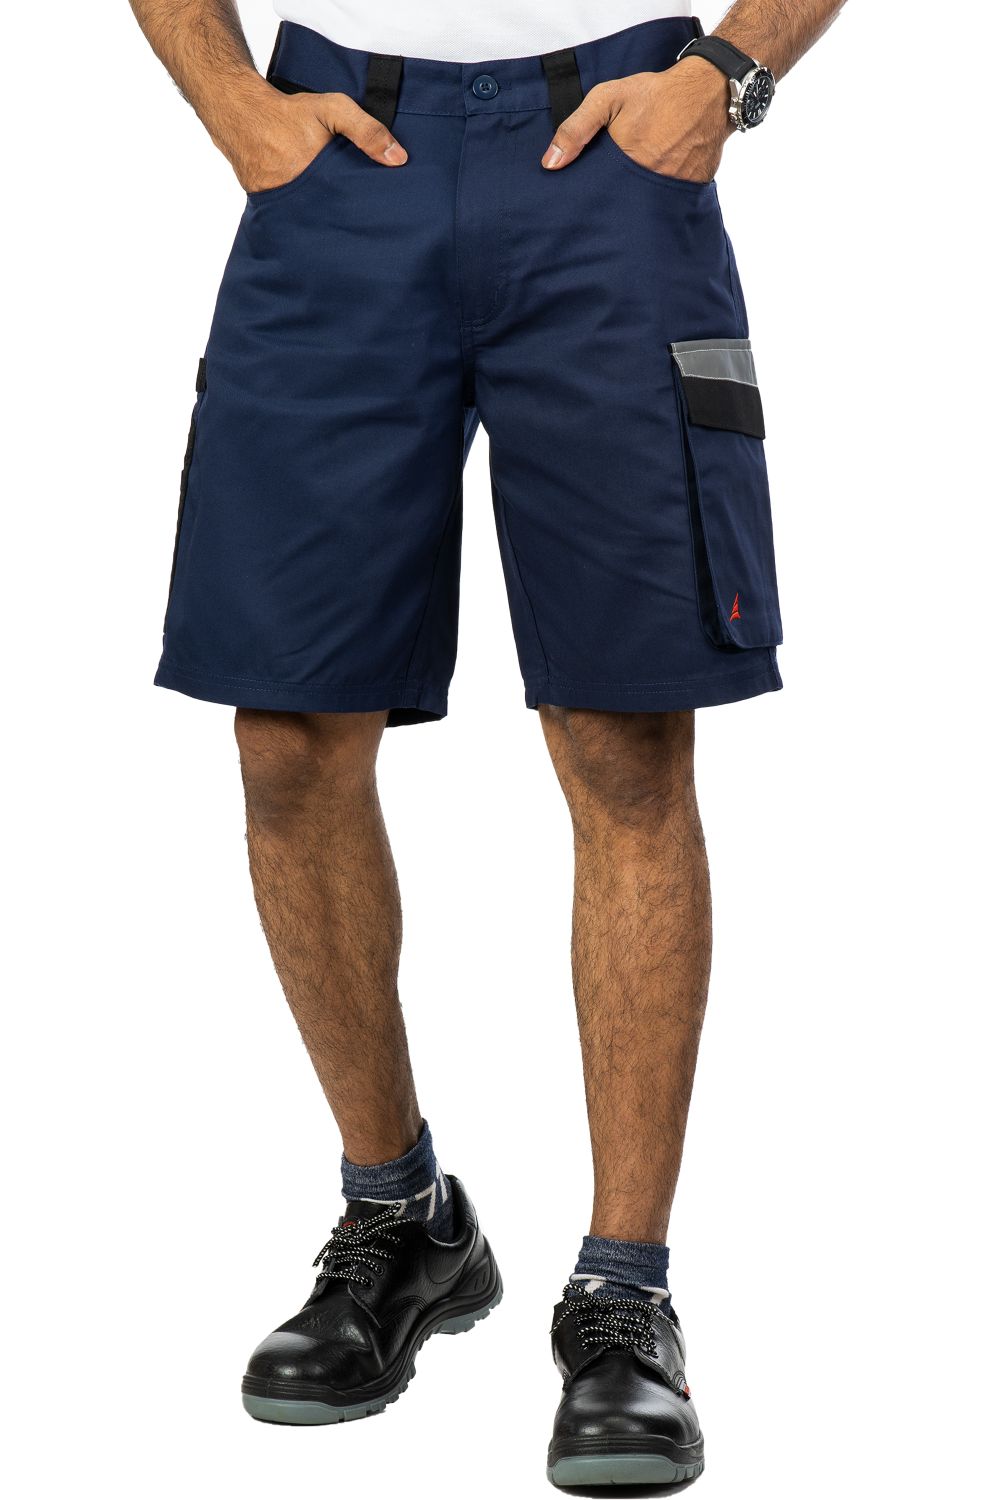 industrial design ergonomic navy-black shorts